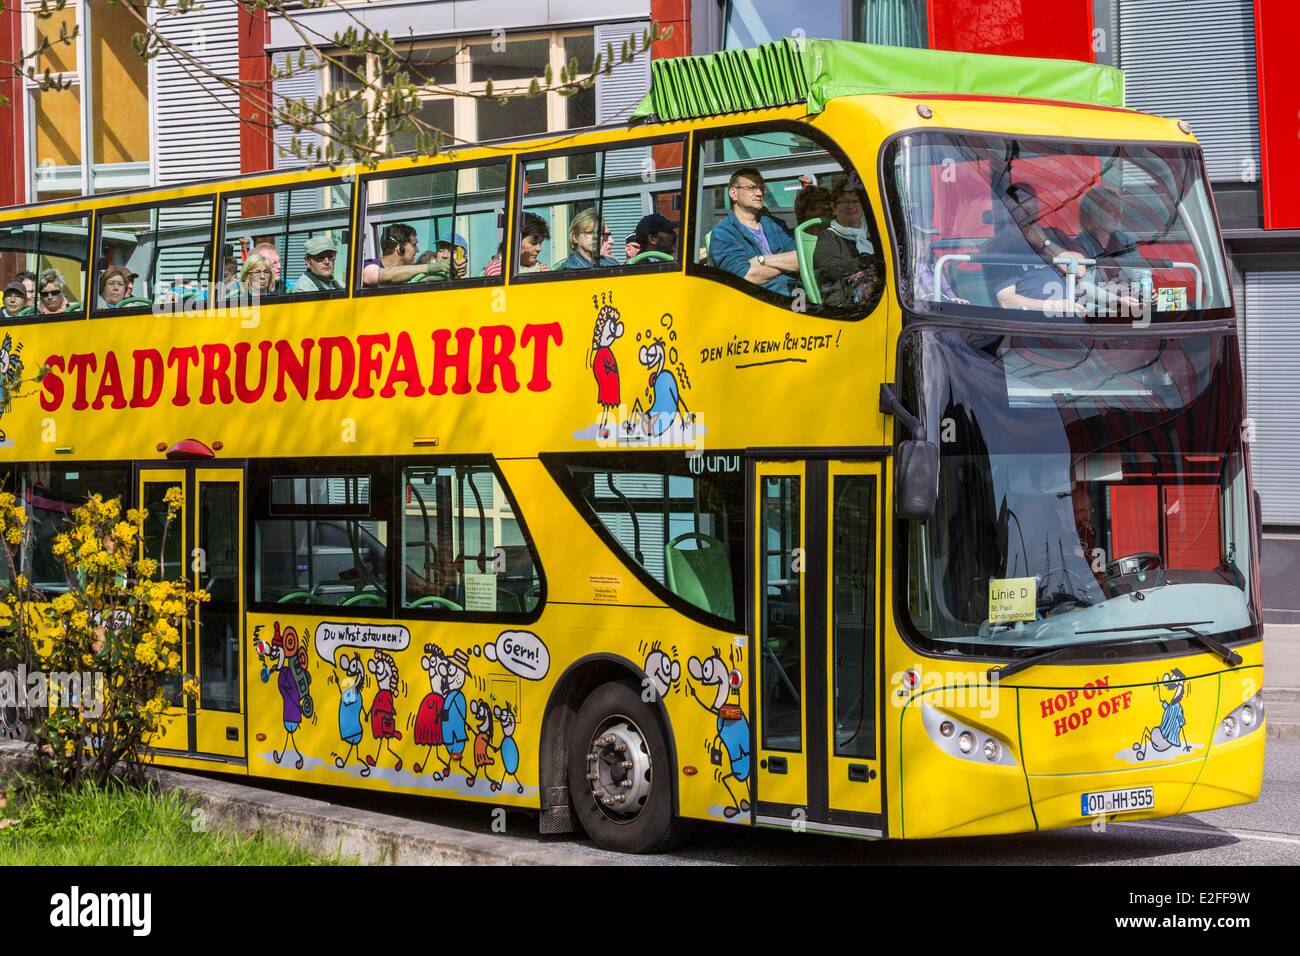 Germania, Amburgo, Stadtrundfahrt autobus turistico Foto Stock